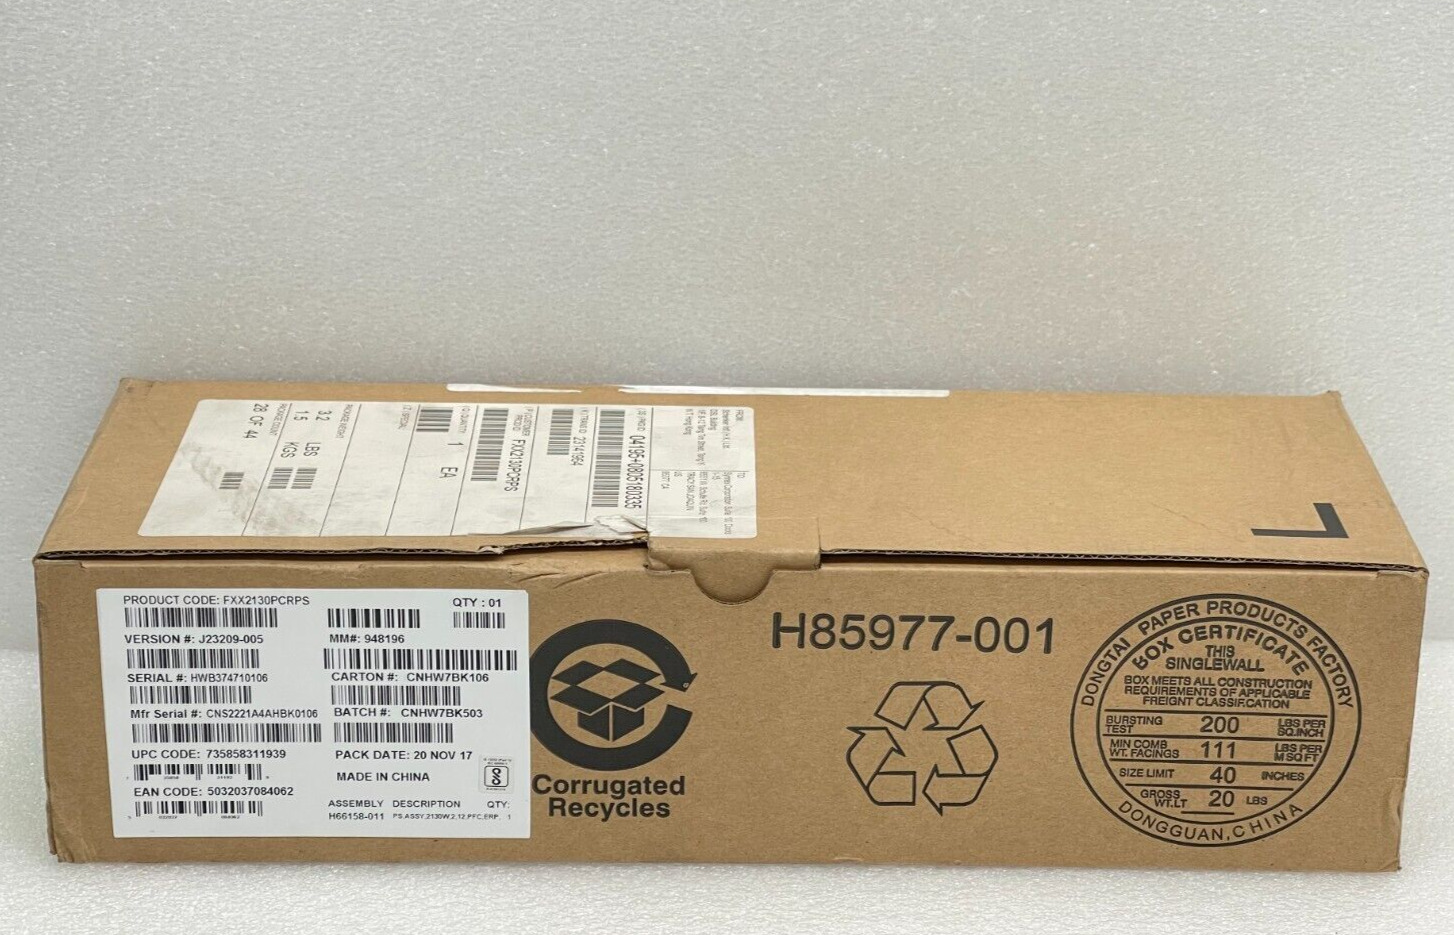 New (Open Box) Intel FXX2130PCRPS 2130W Power Supply (H66158-011) 